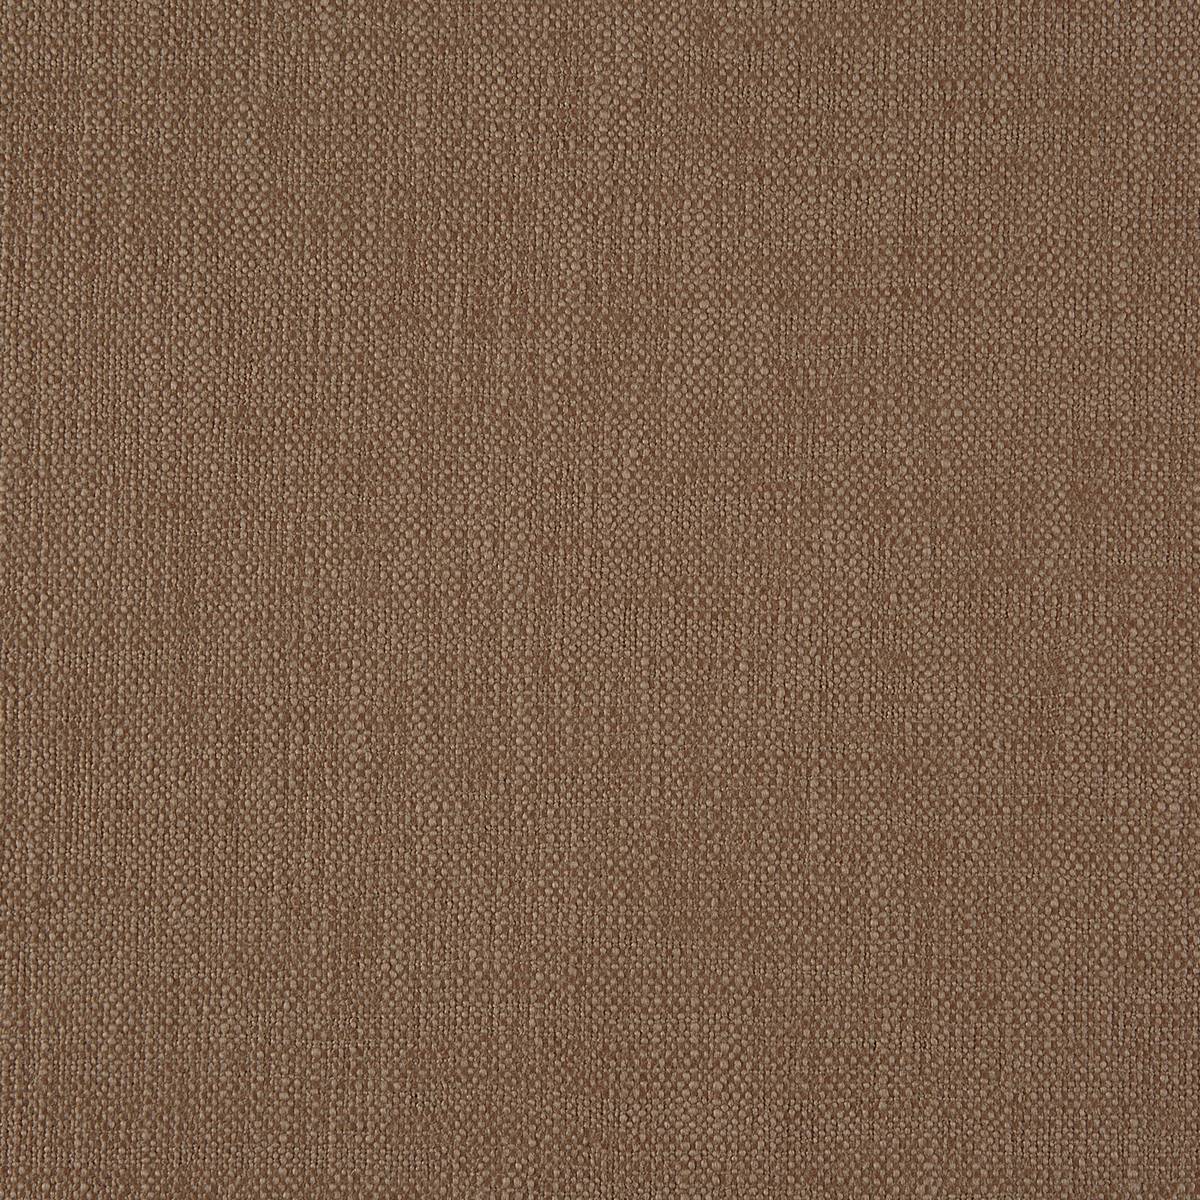 Rustic Cinnamon Fabric by Prestigious Textiles